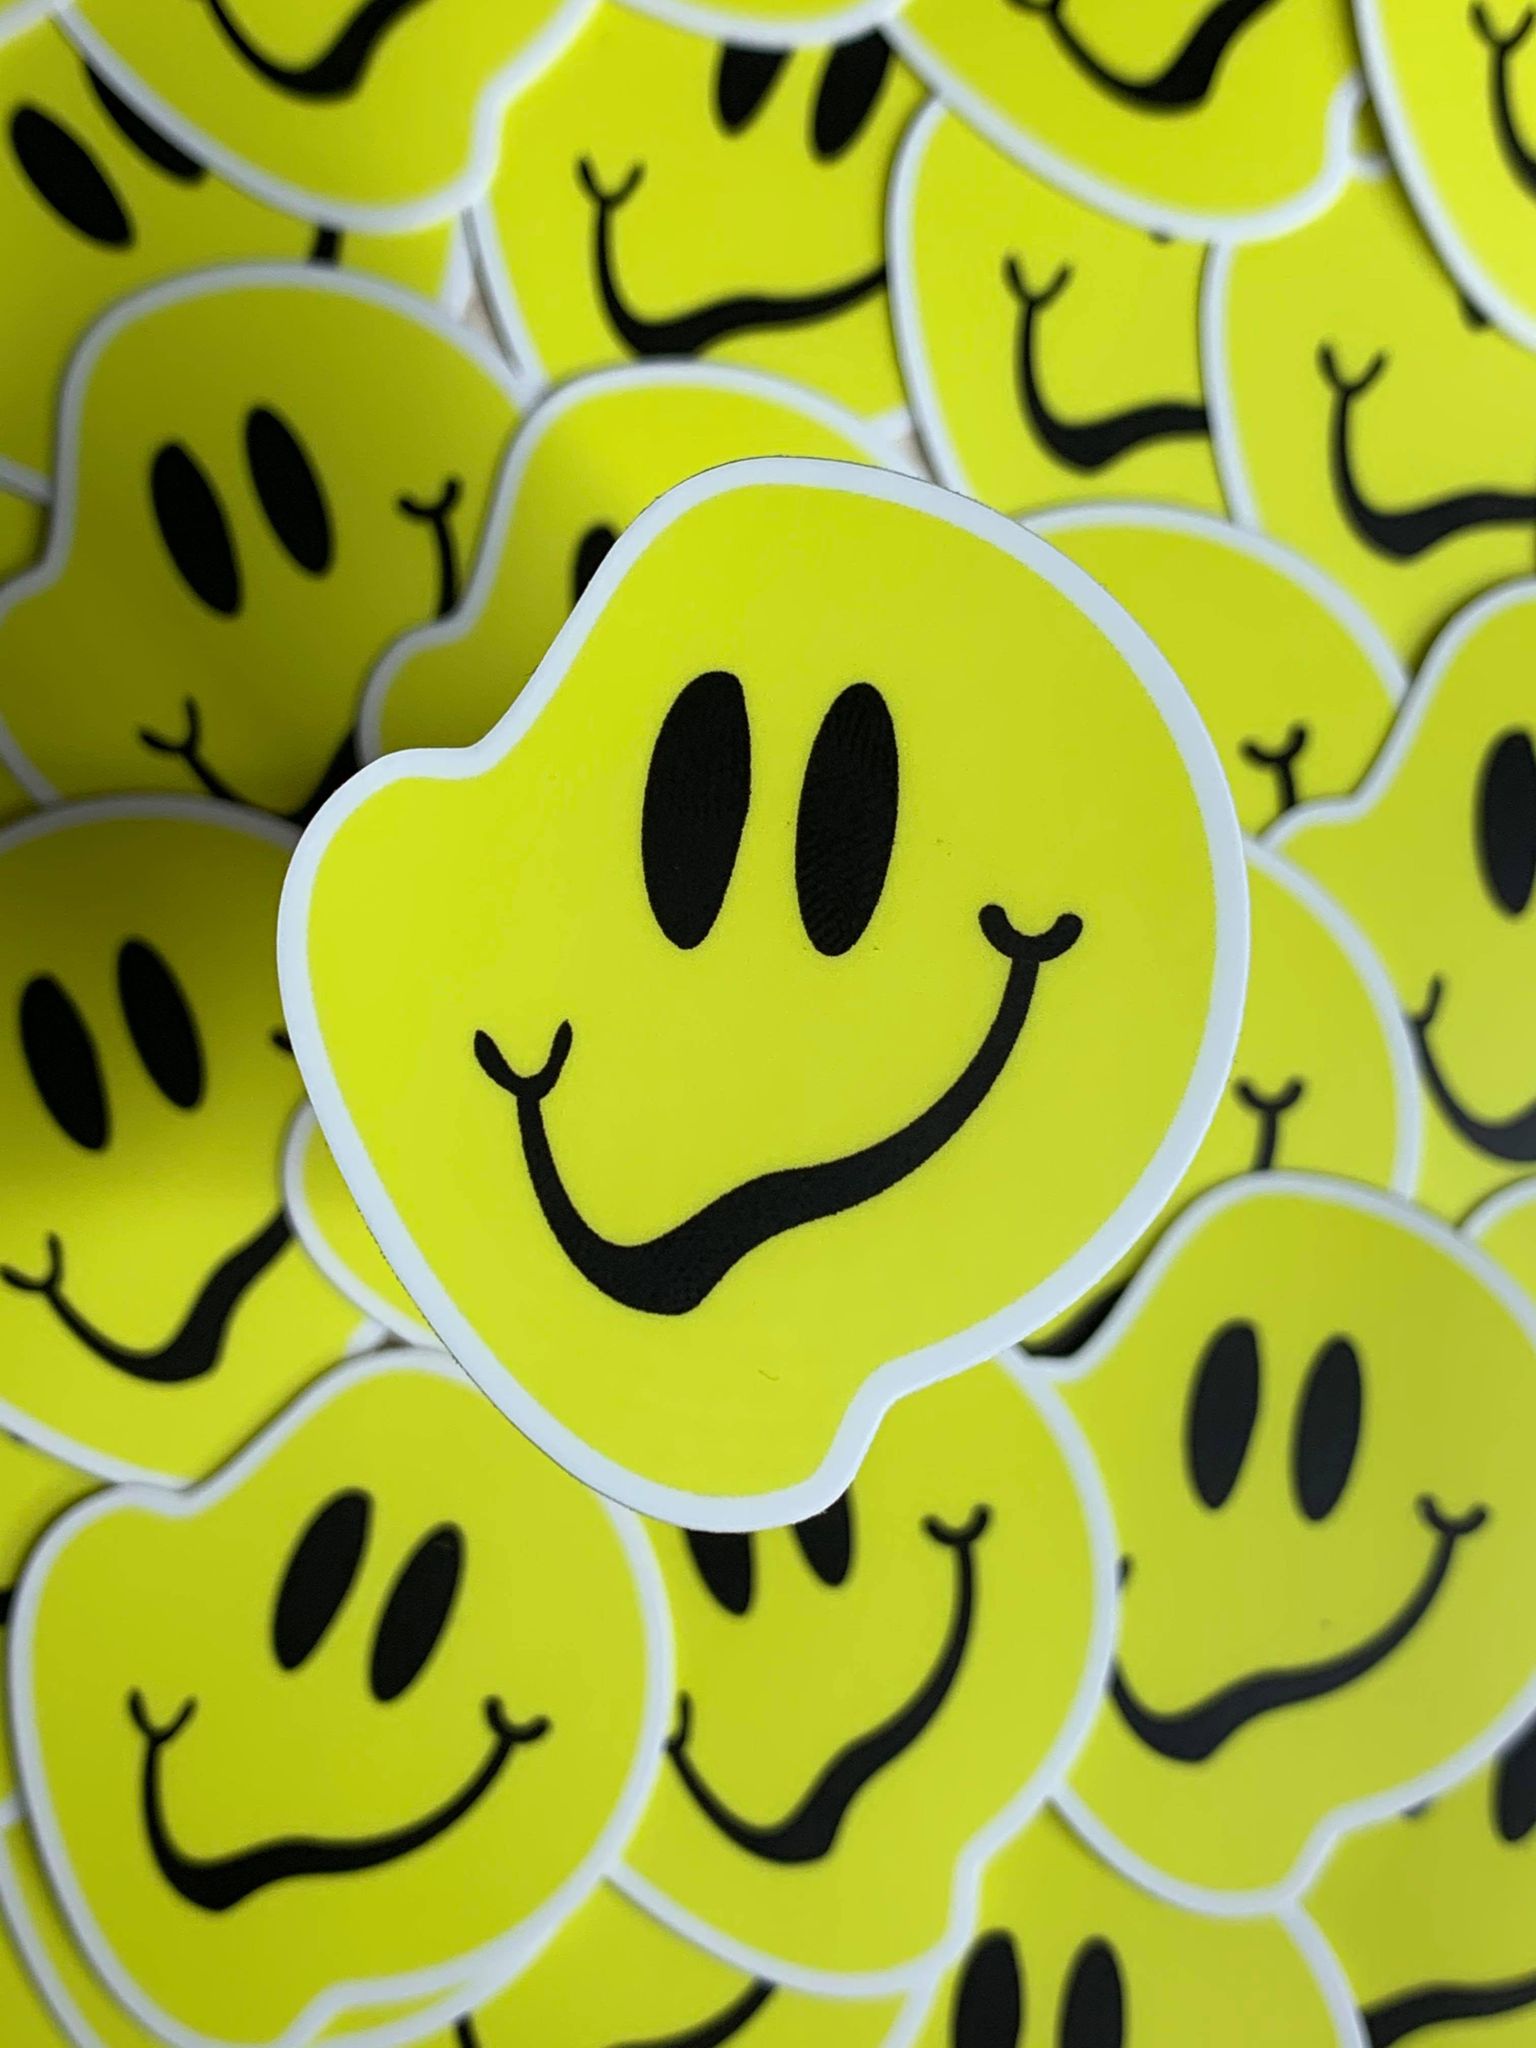 Smiley Face' Sticker